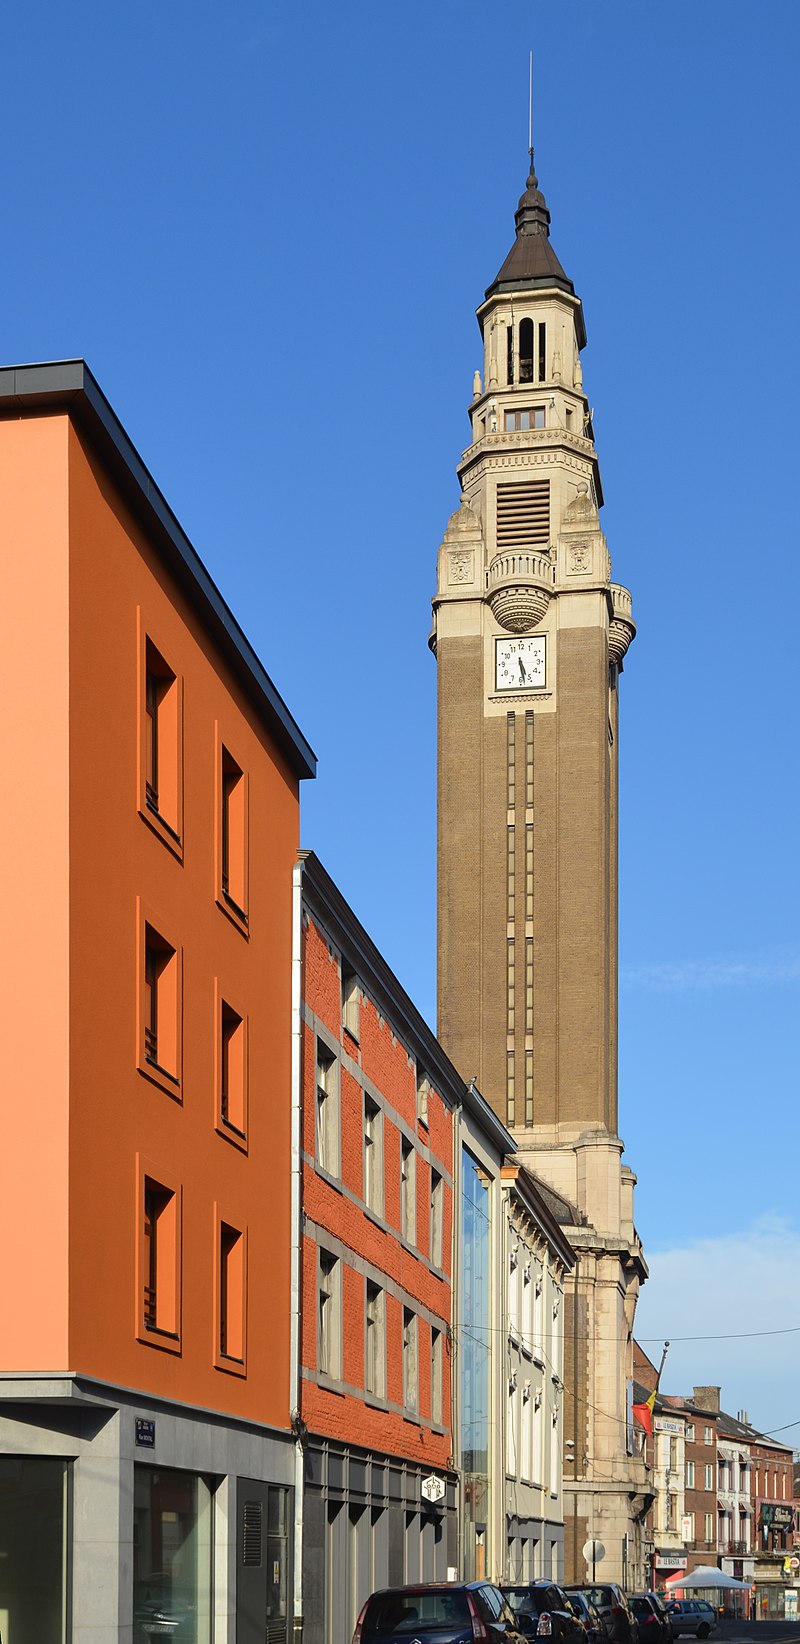 The belfry of Charleroi - Charleroi